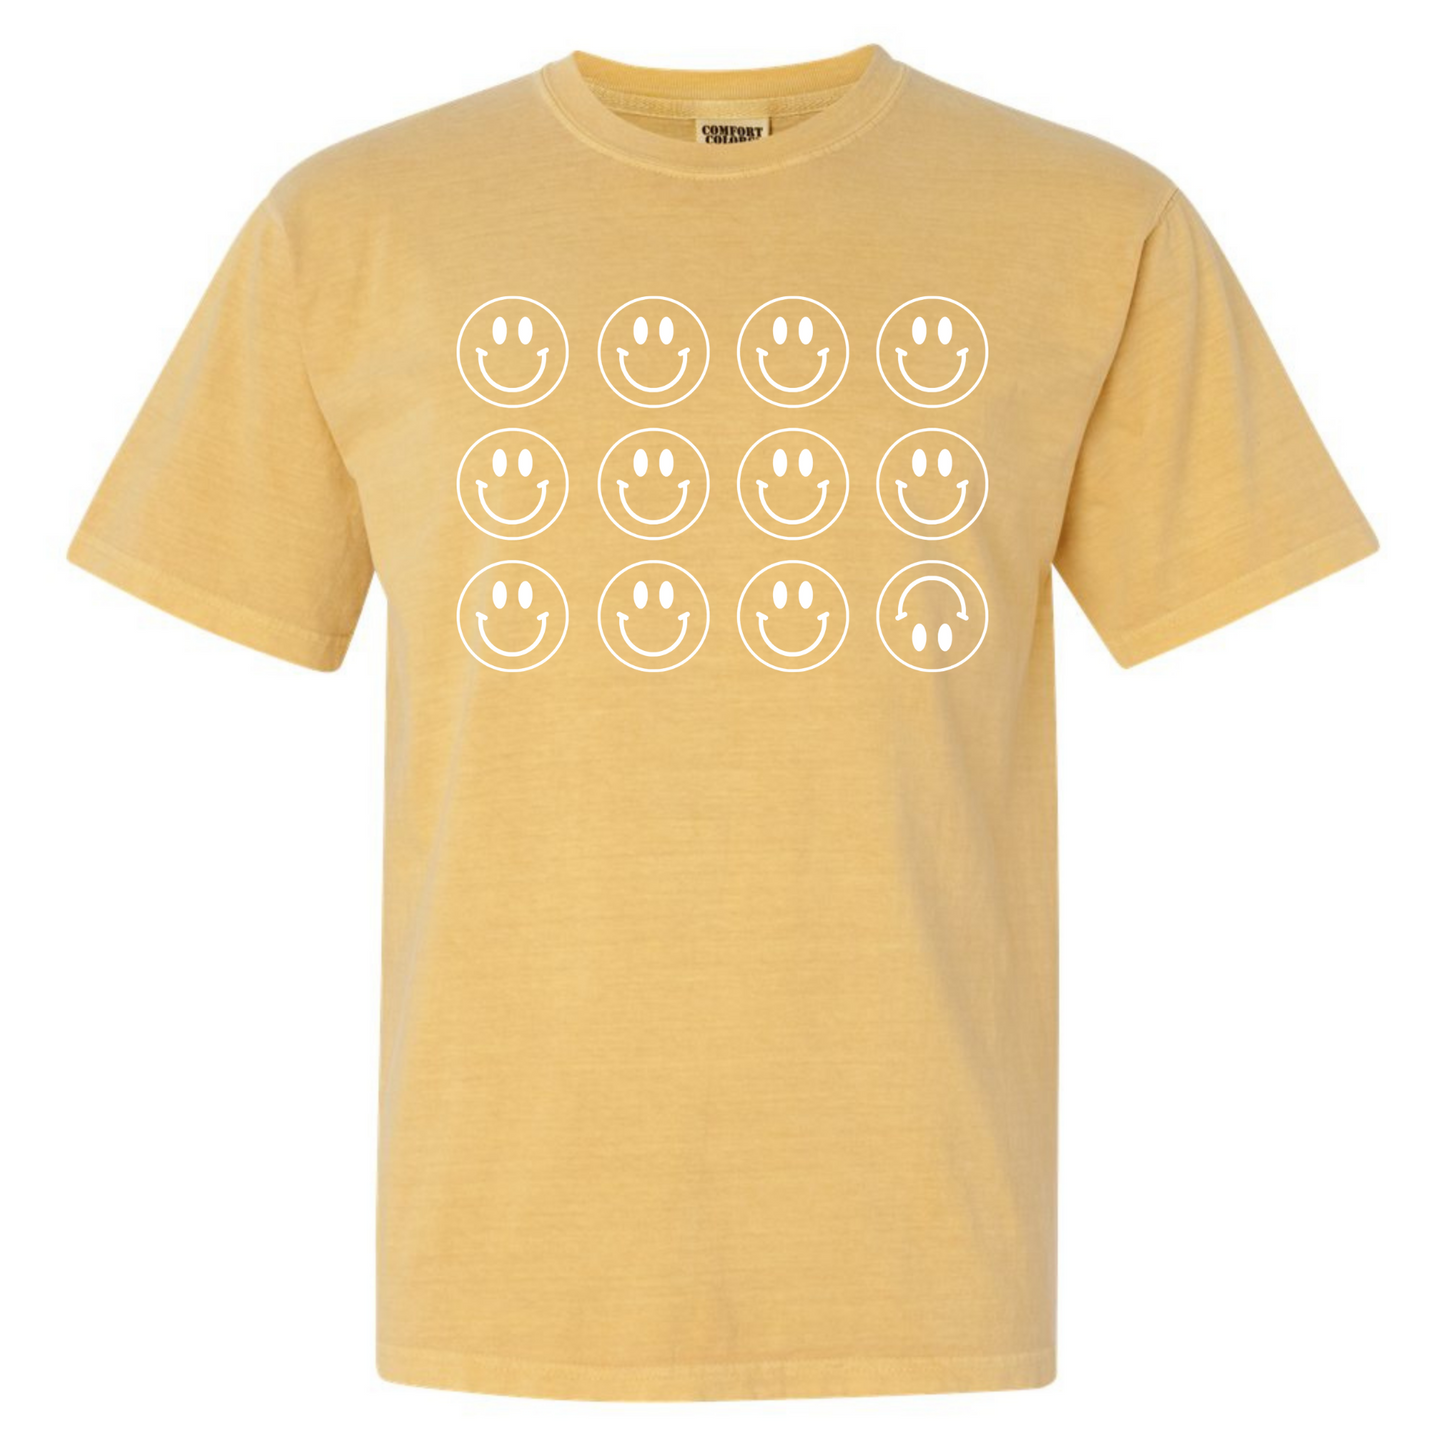 Smiley Shirt in Mustard